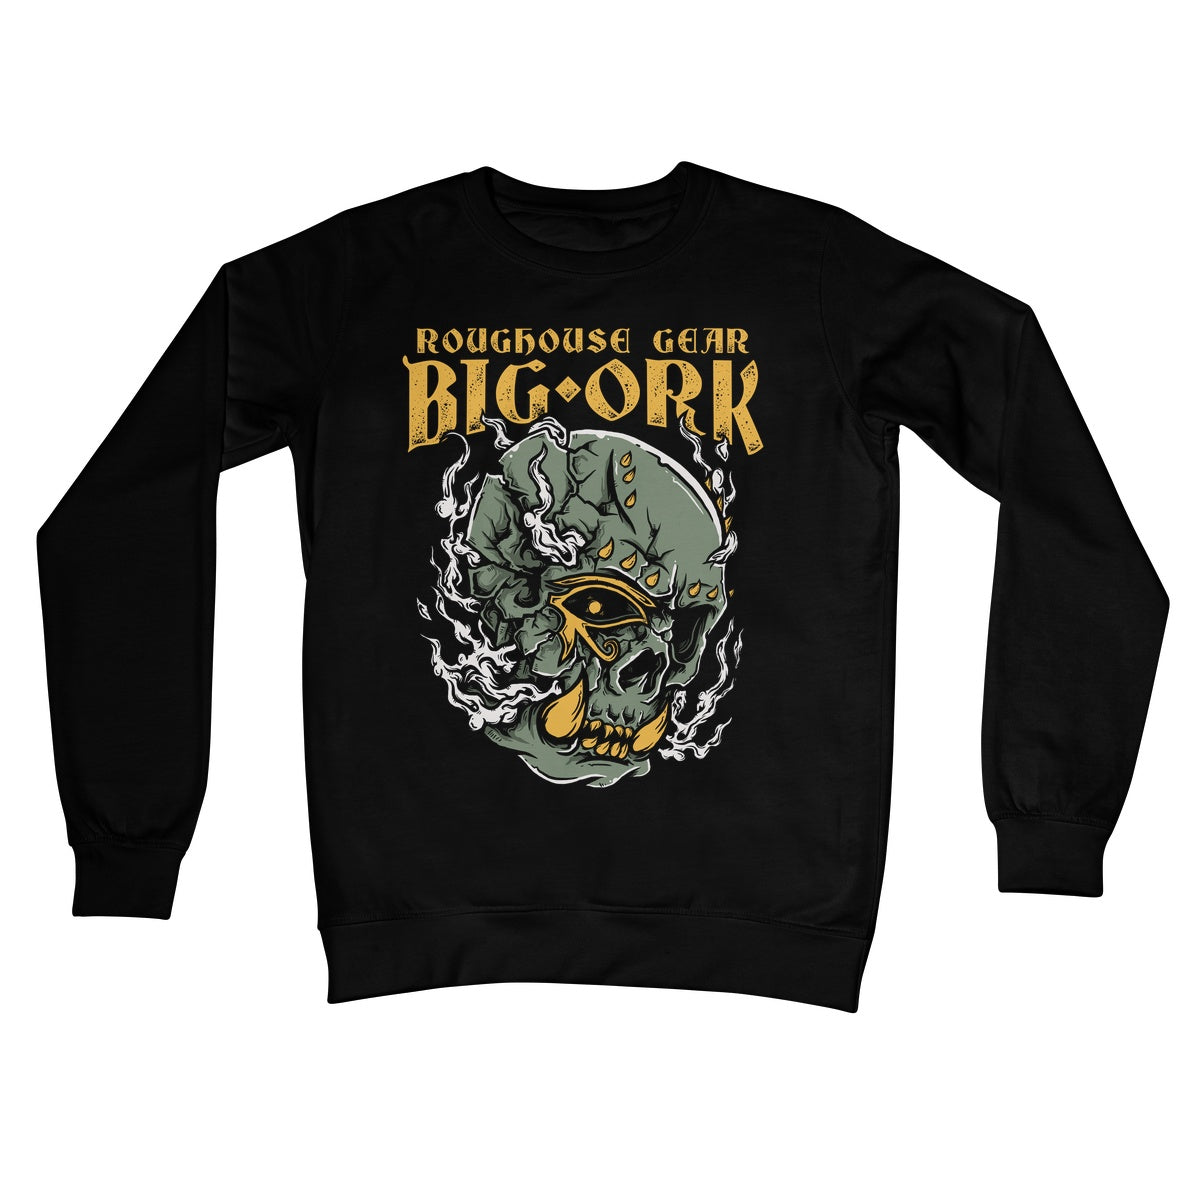 The Awakening Big Ork Crew Neck Sweatshirt